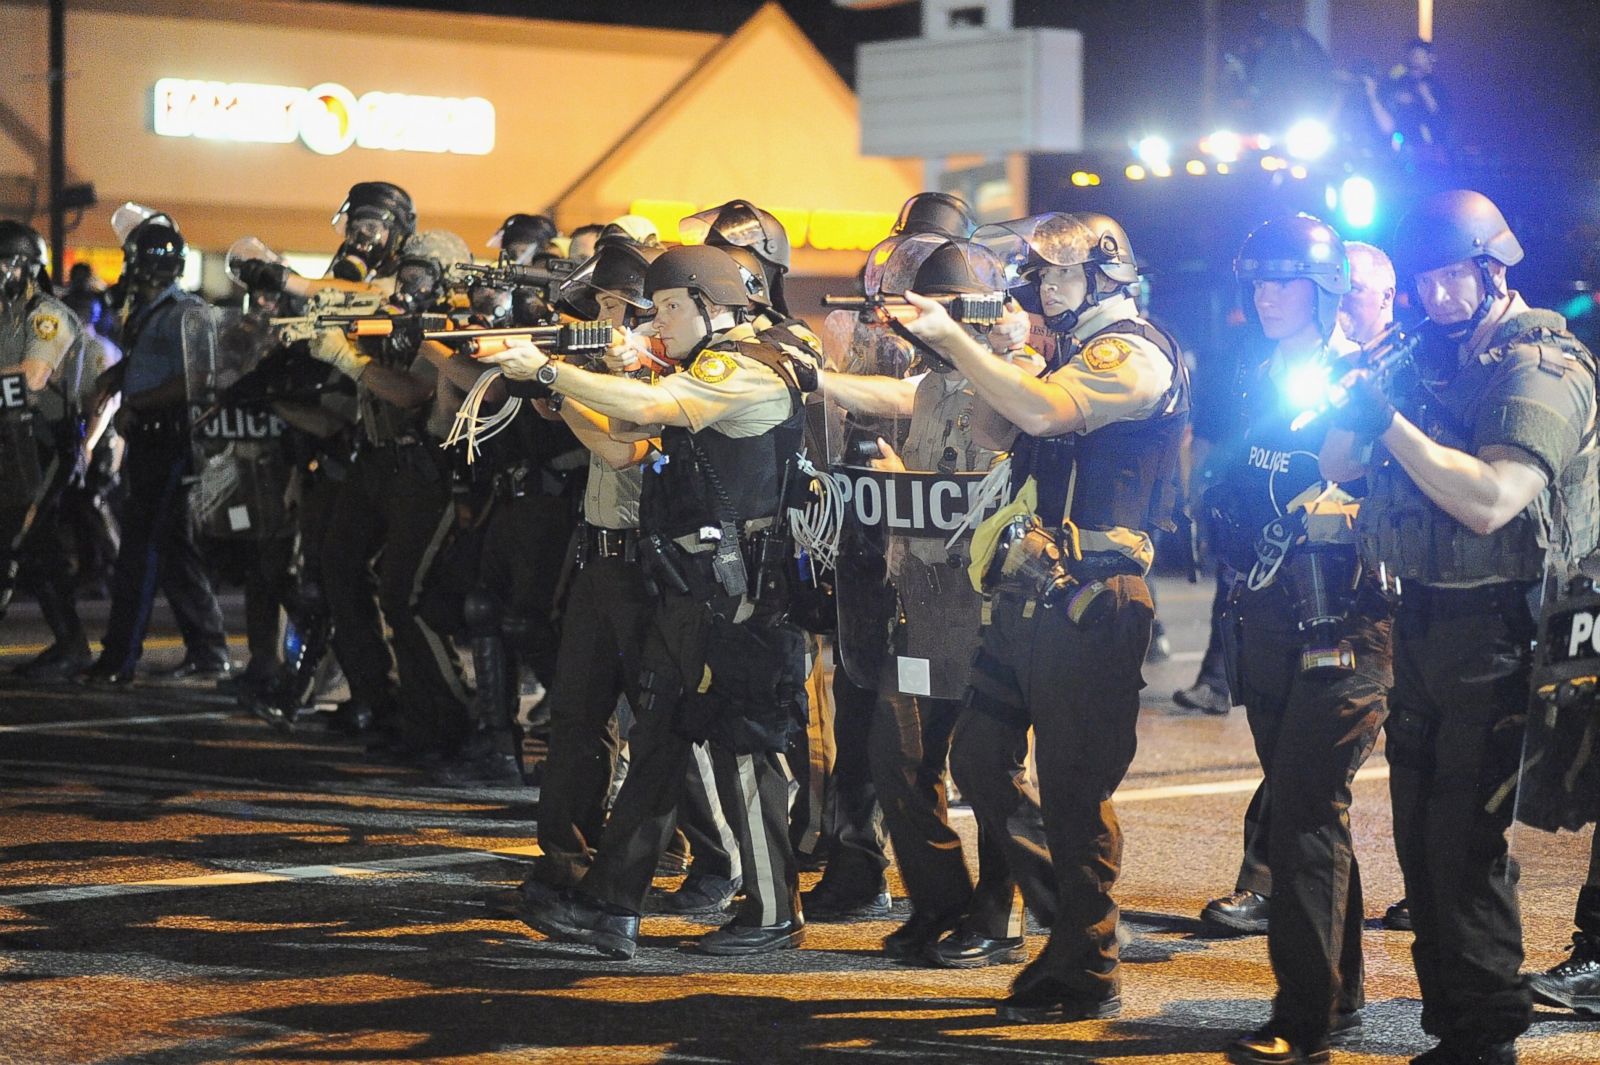 Powerful Scenes From Ferguson, Missouri - ABC News